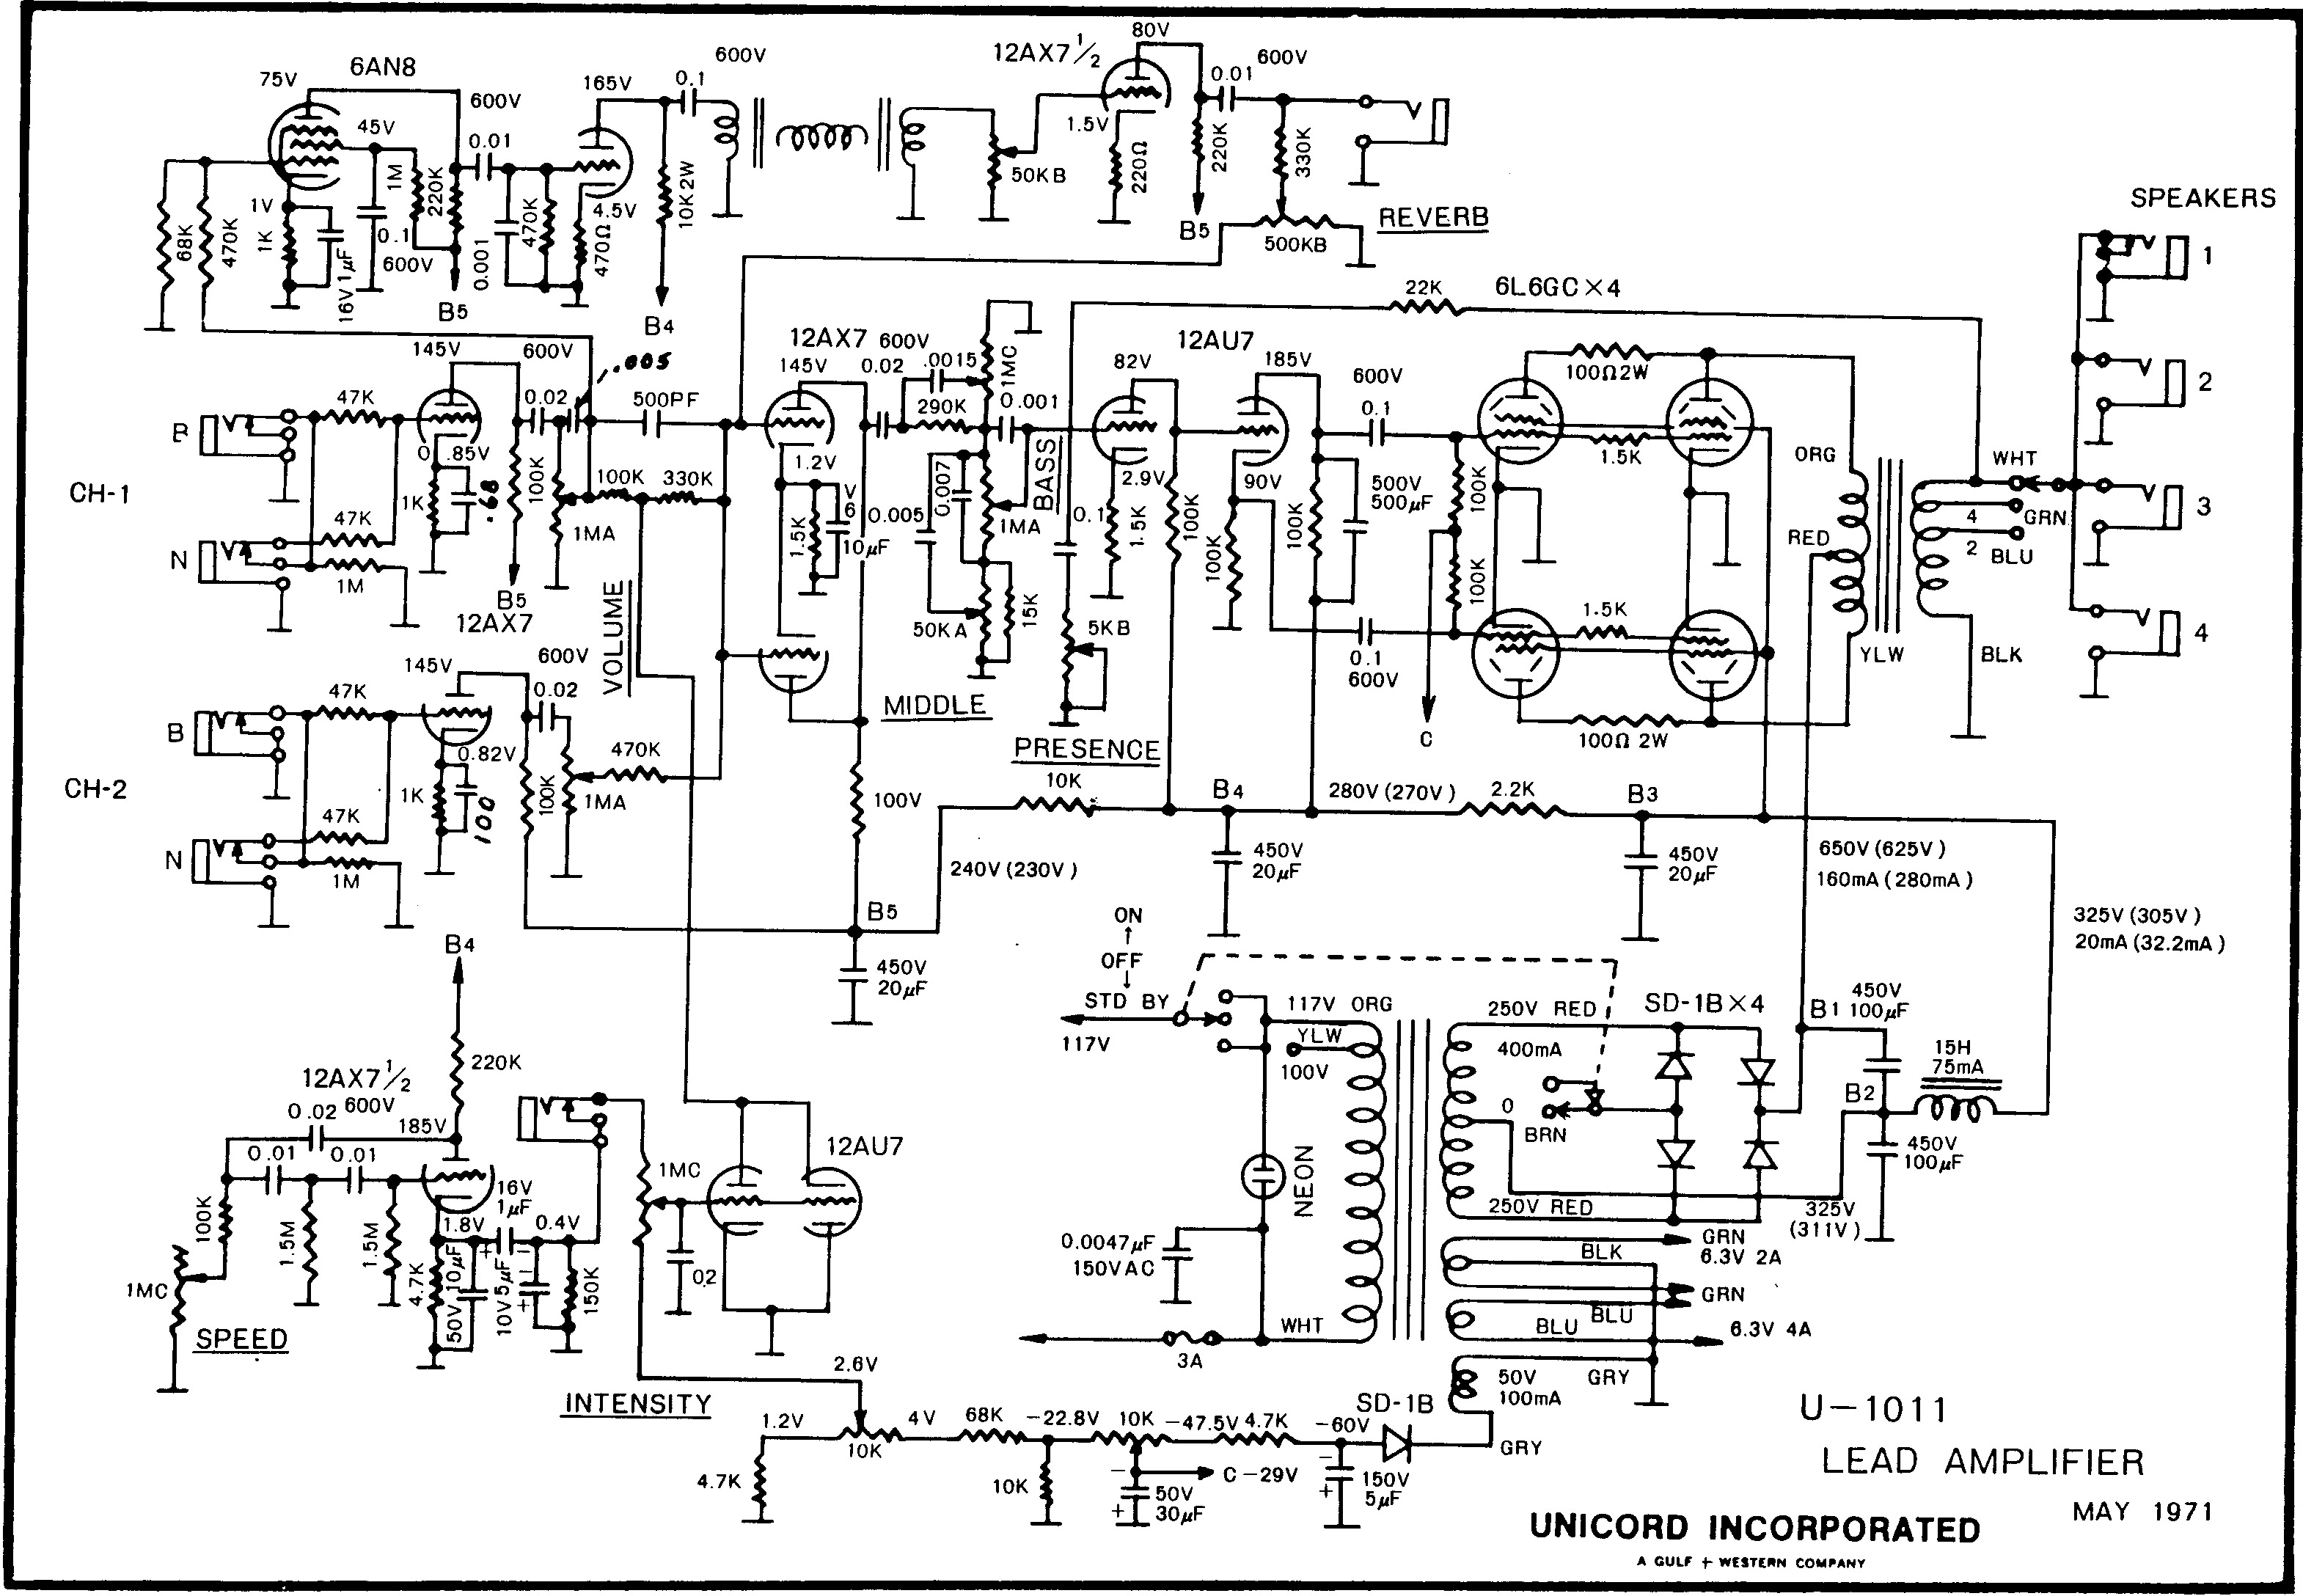 Univox U-1011 Amplifier Schematic.gif